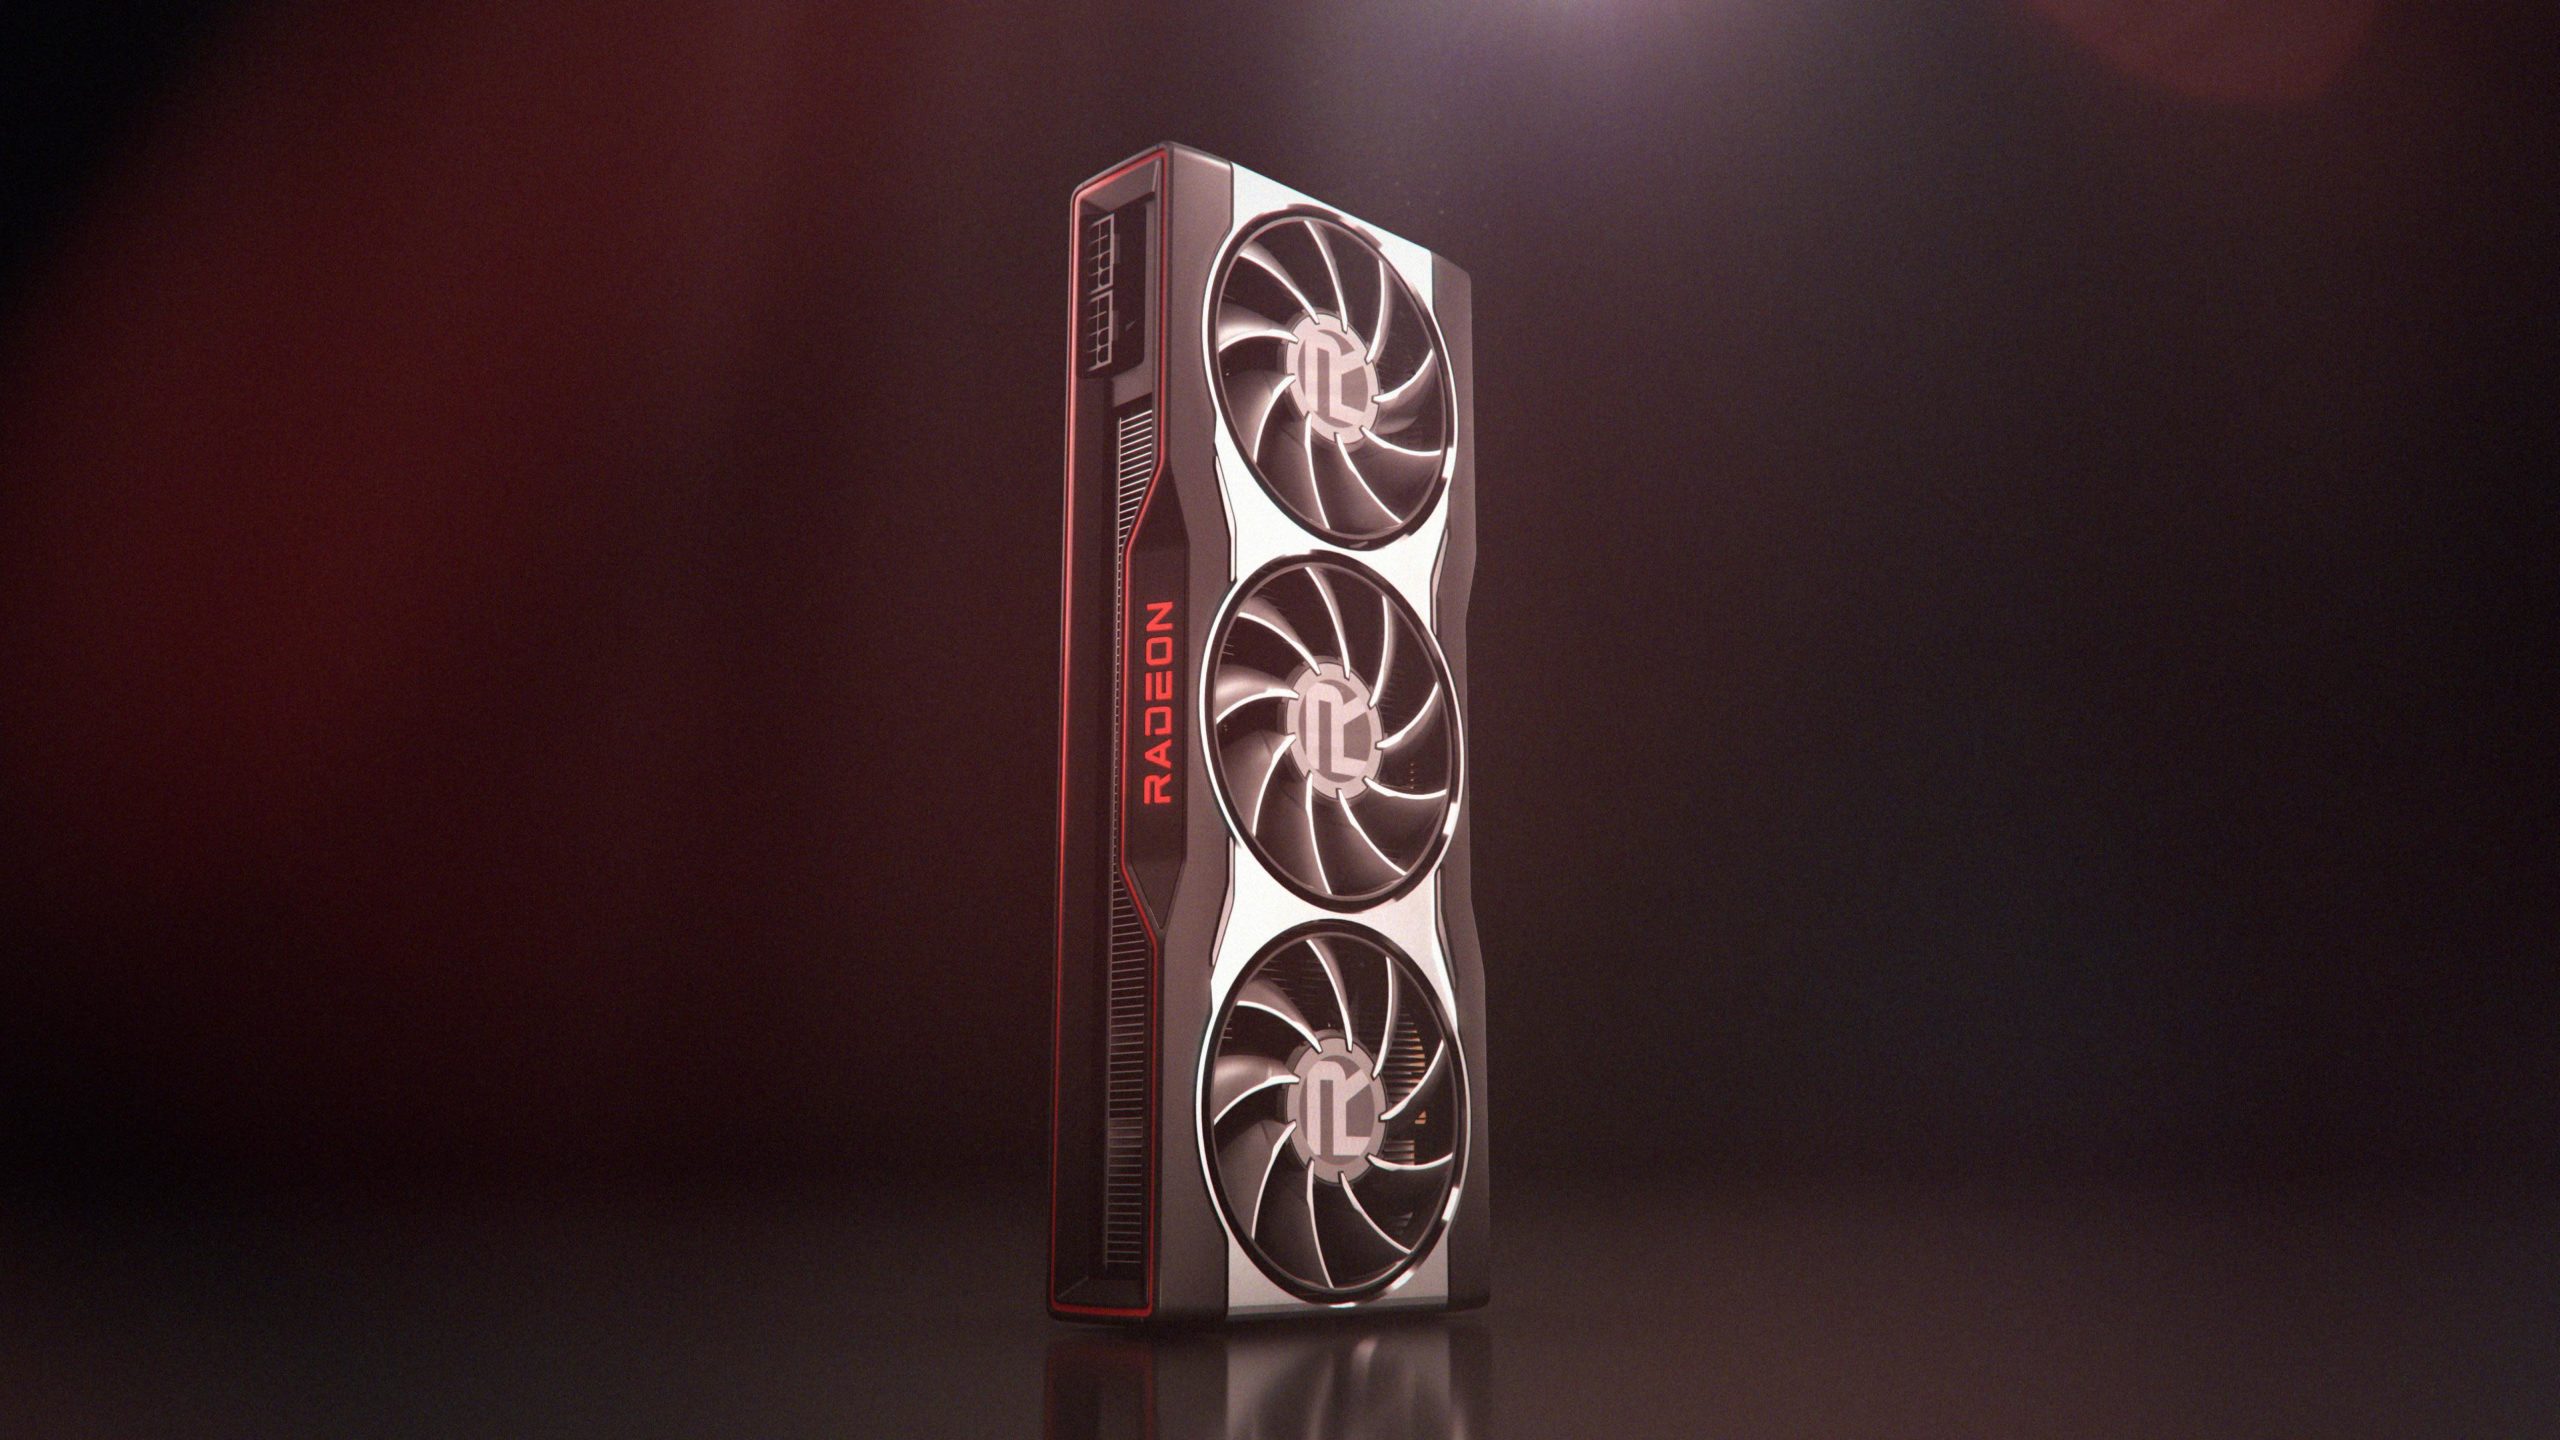 How to See the New Radeon RX 6000 GPU in ‘Fortnite’